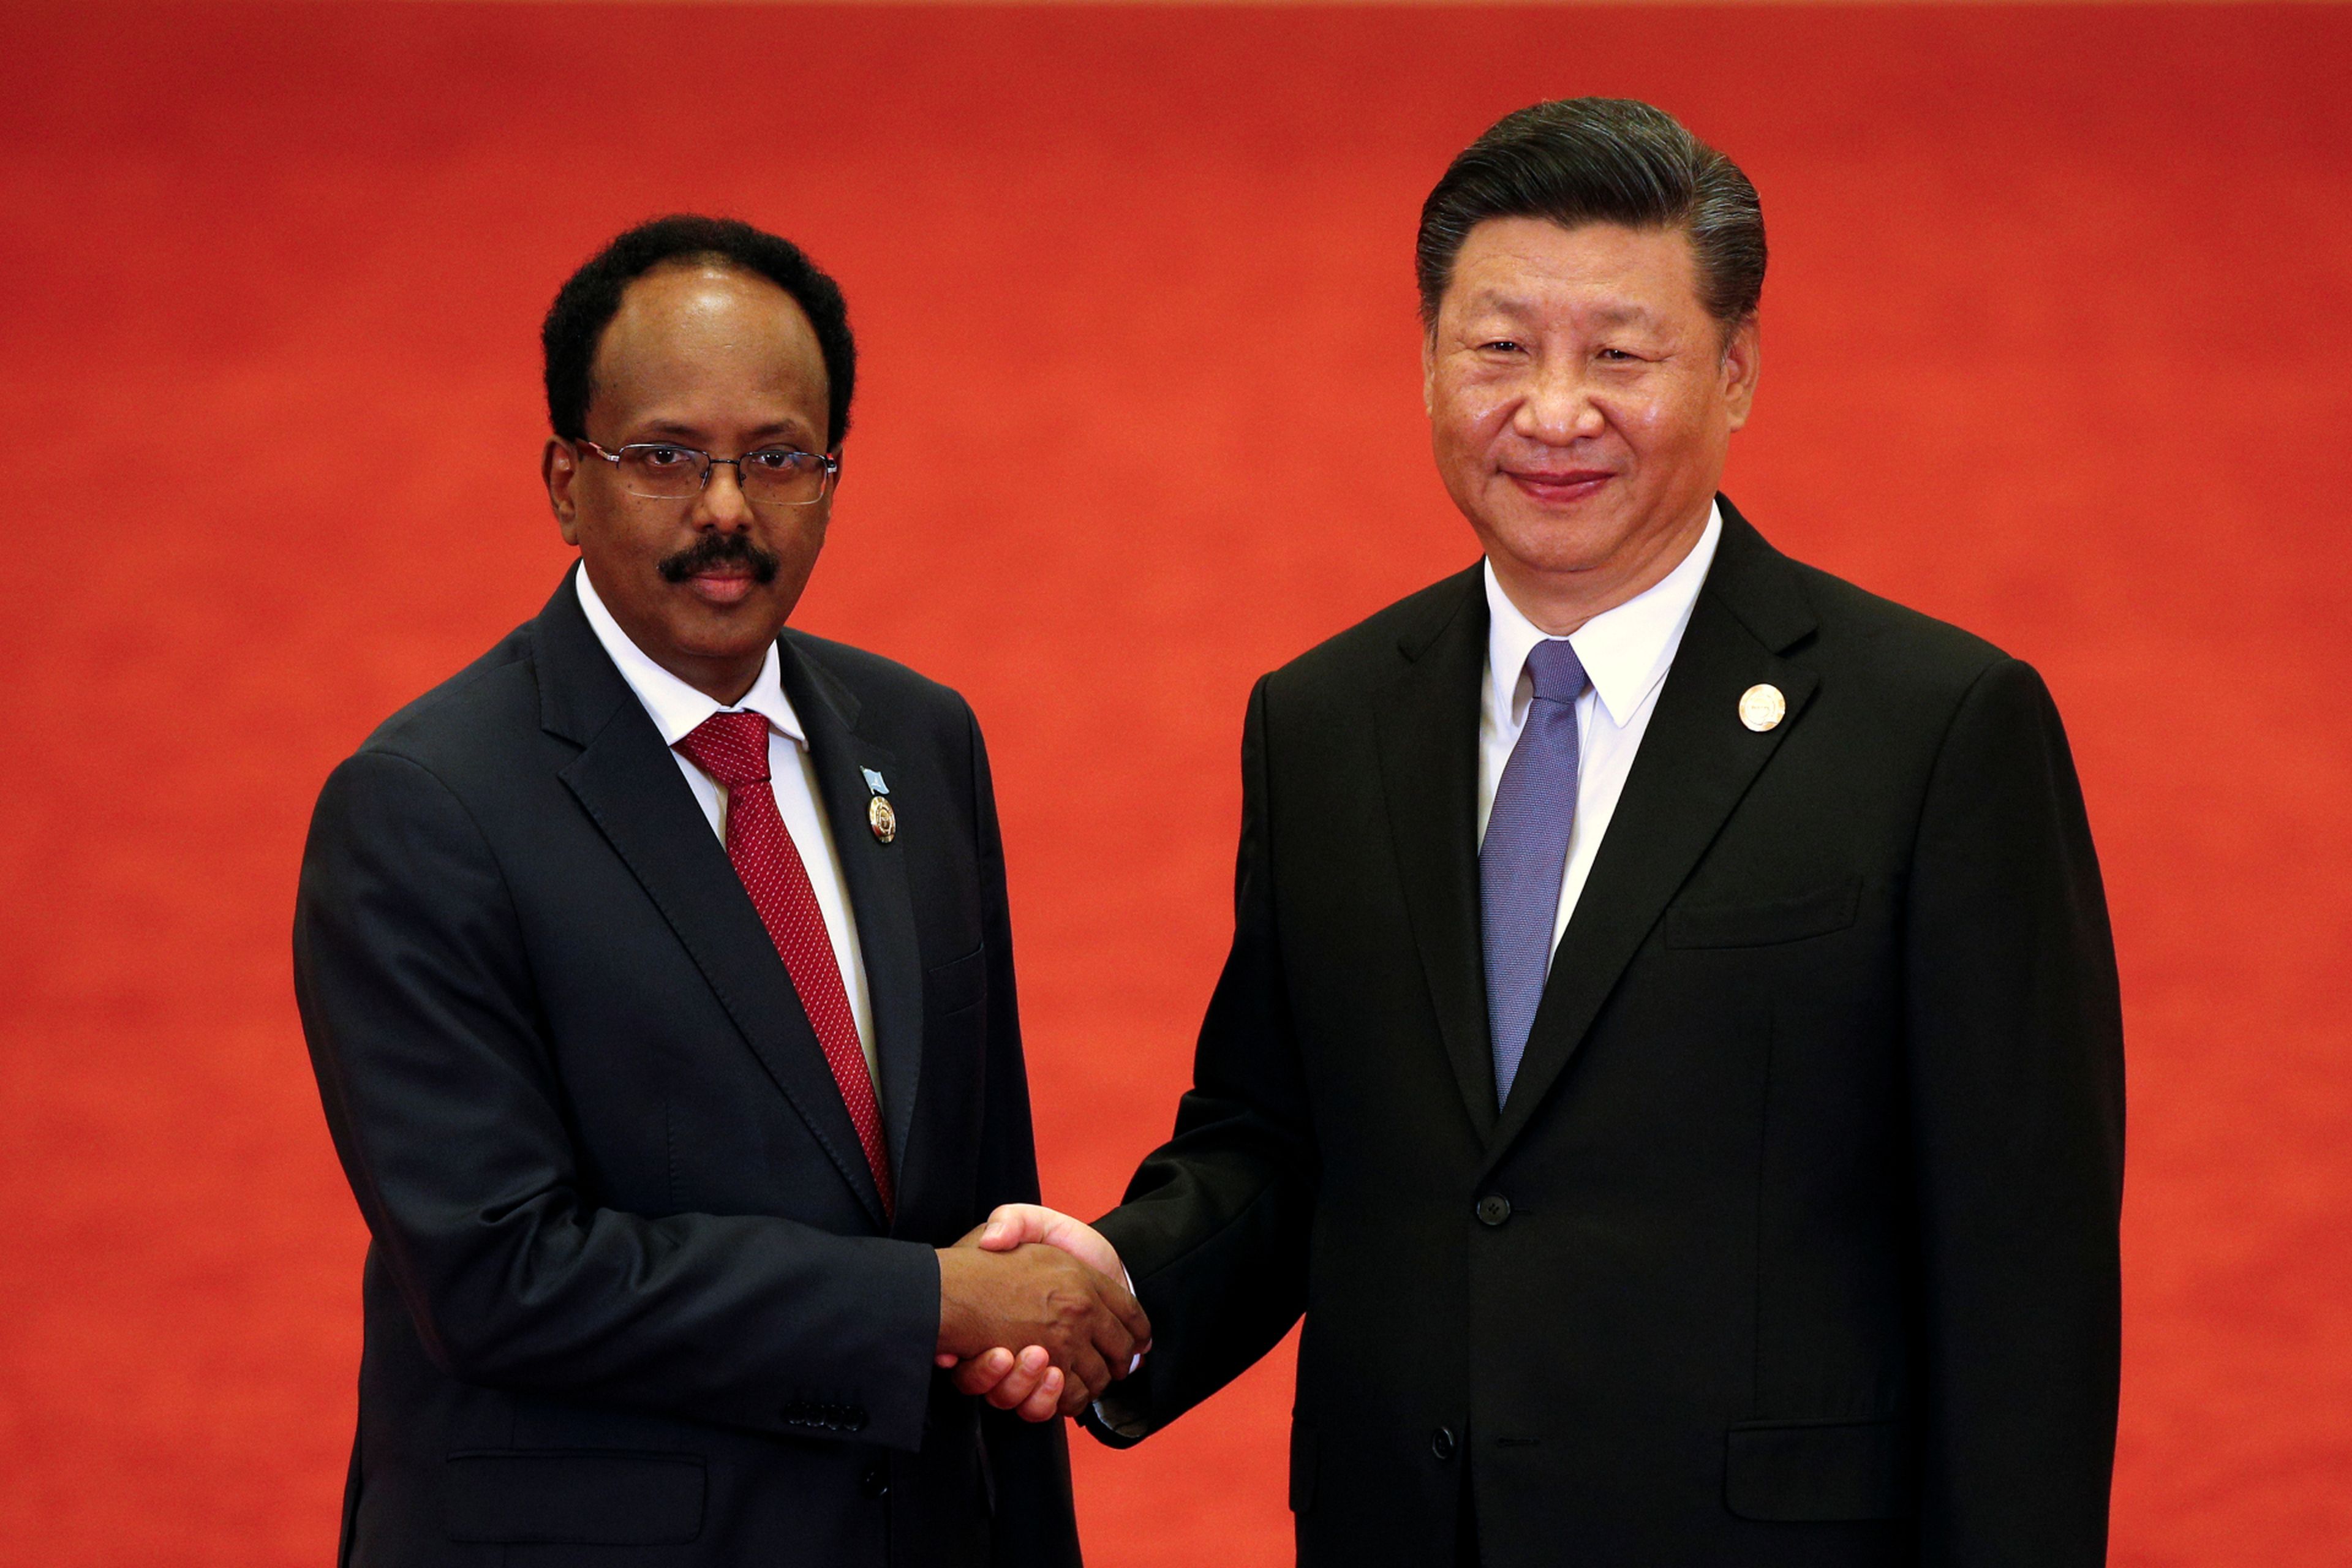 El presidente de Somalia, Mohamed Abdullahi Mohamed, con su homólogo chino, Xi Jinping